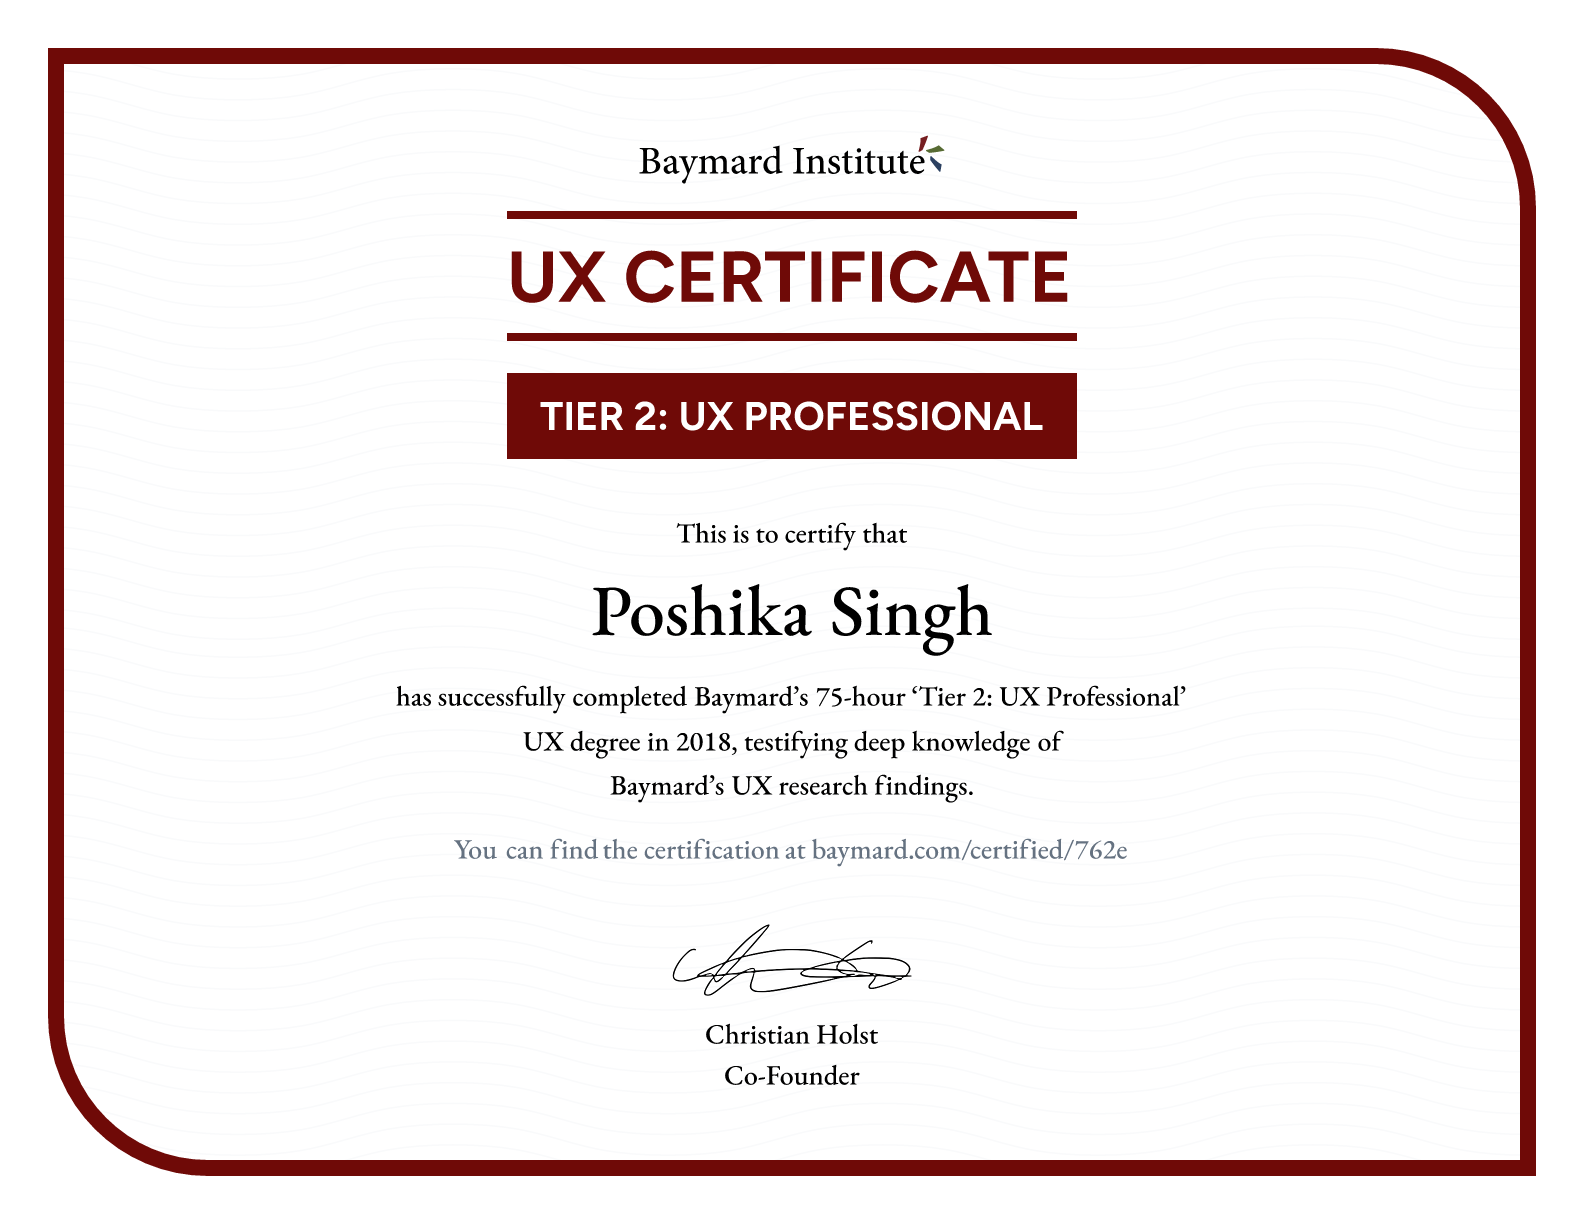 Poshika Singh’s certificate